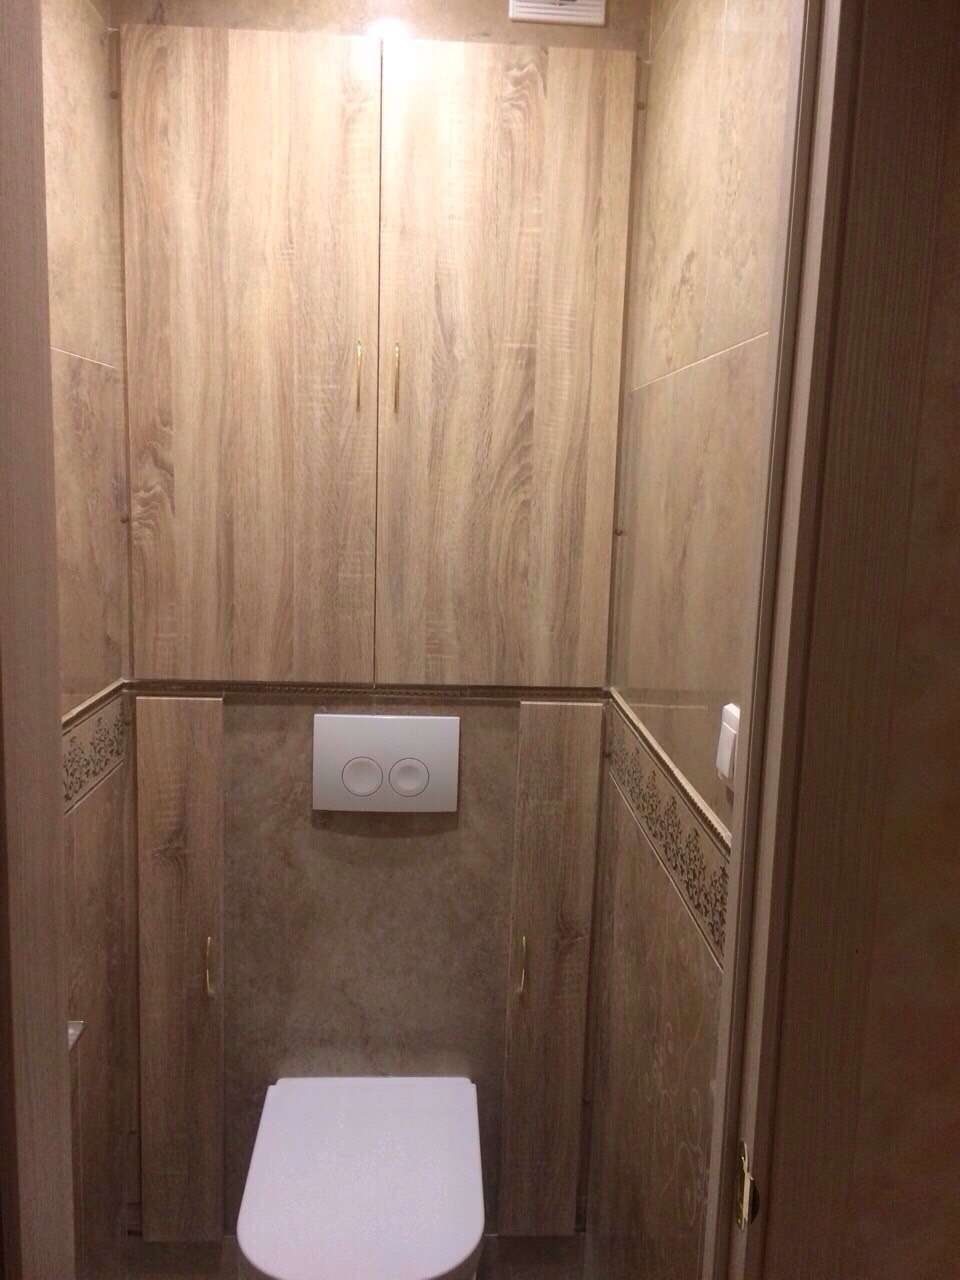 шкаф в туалете над унитазом с инсталляцией